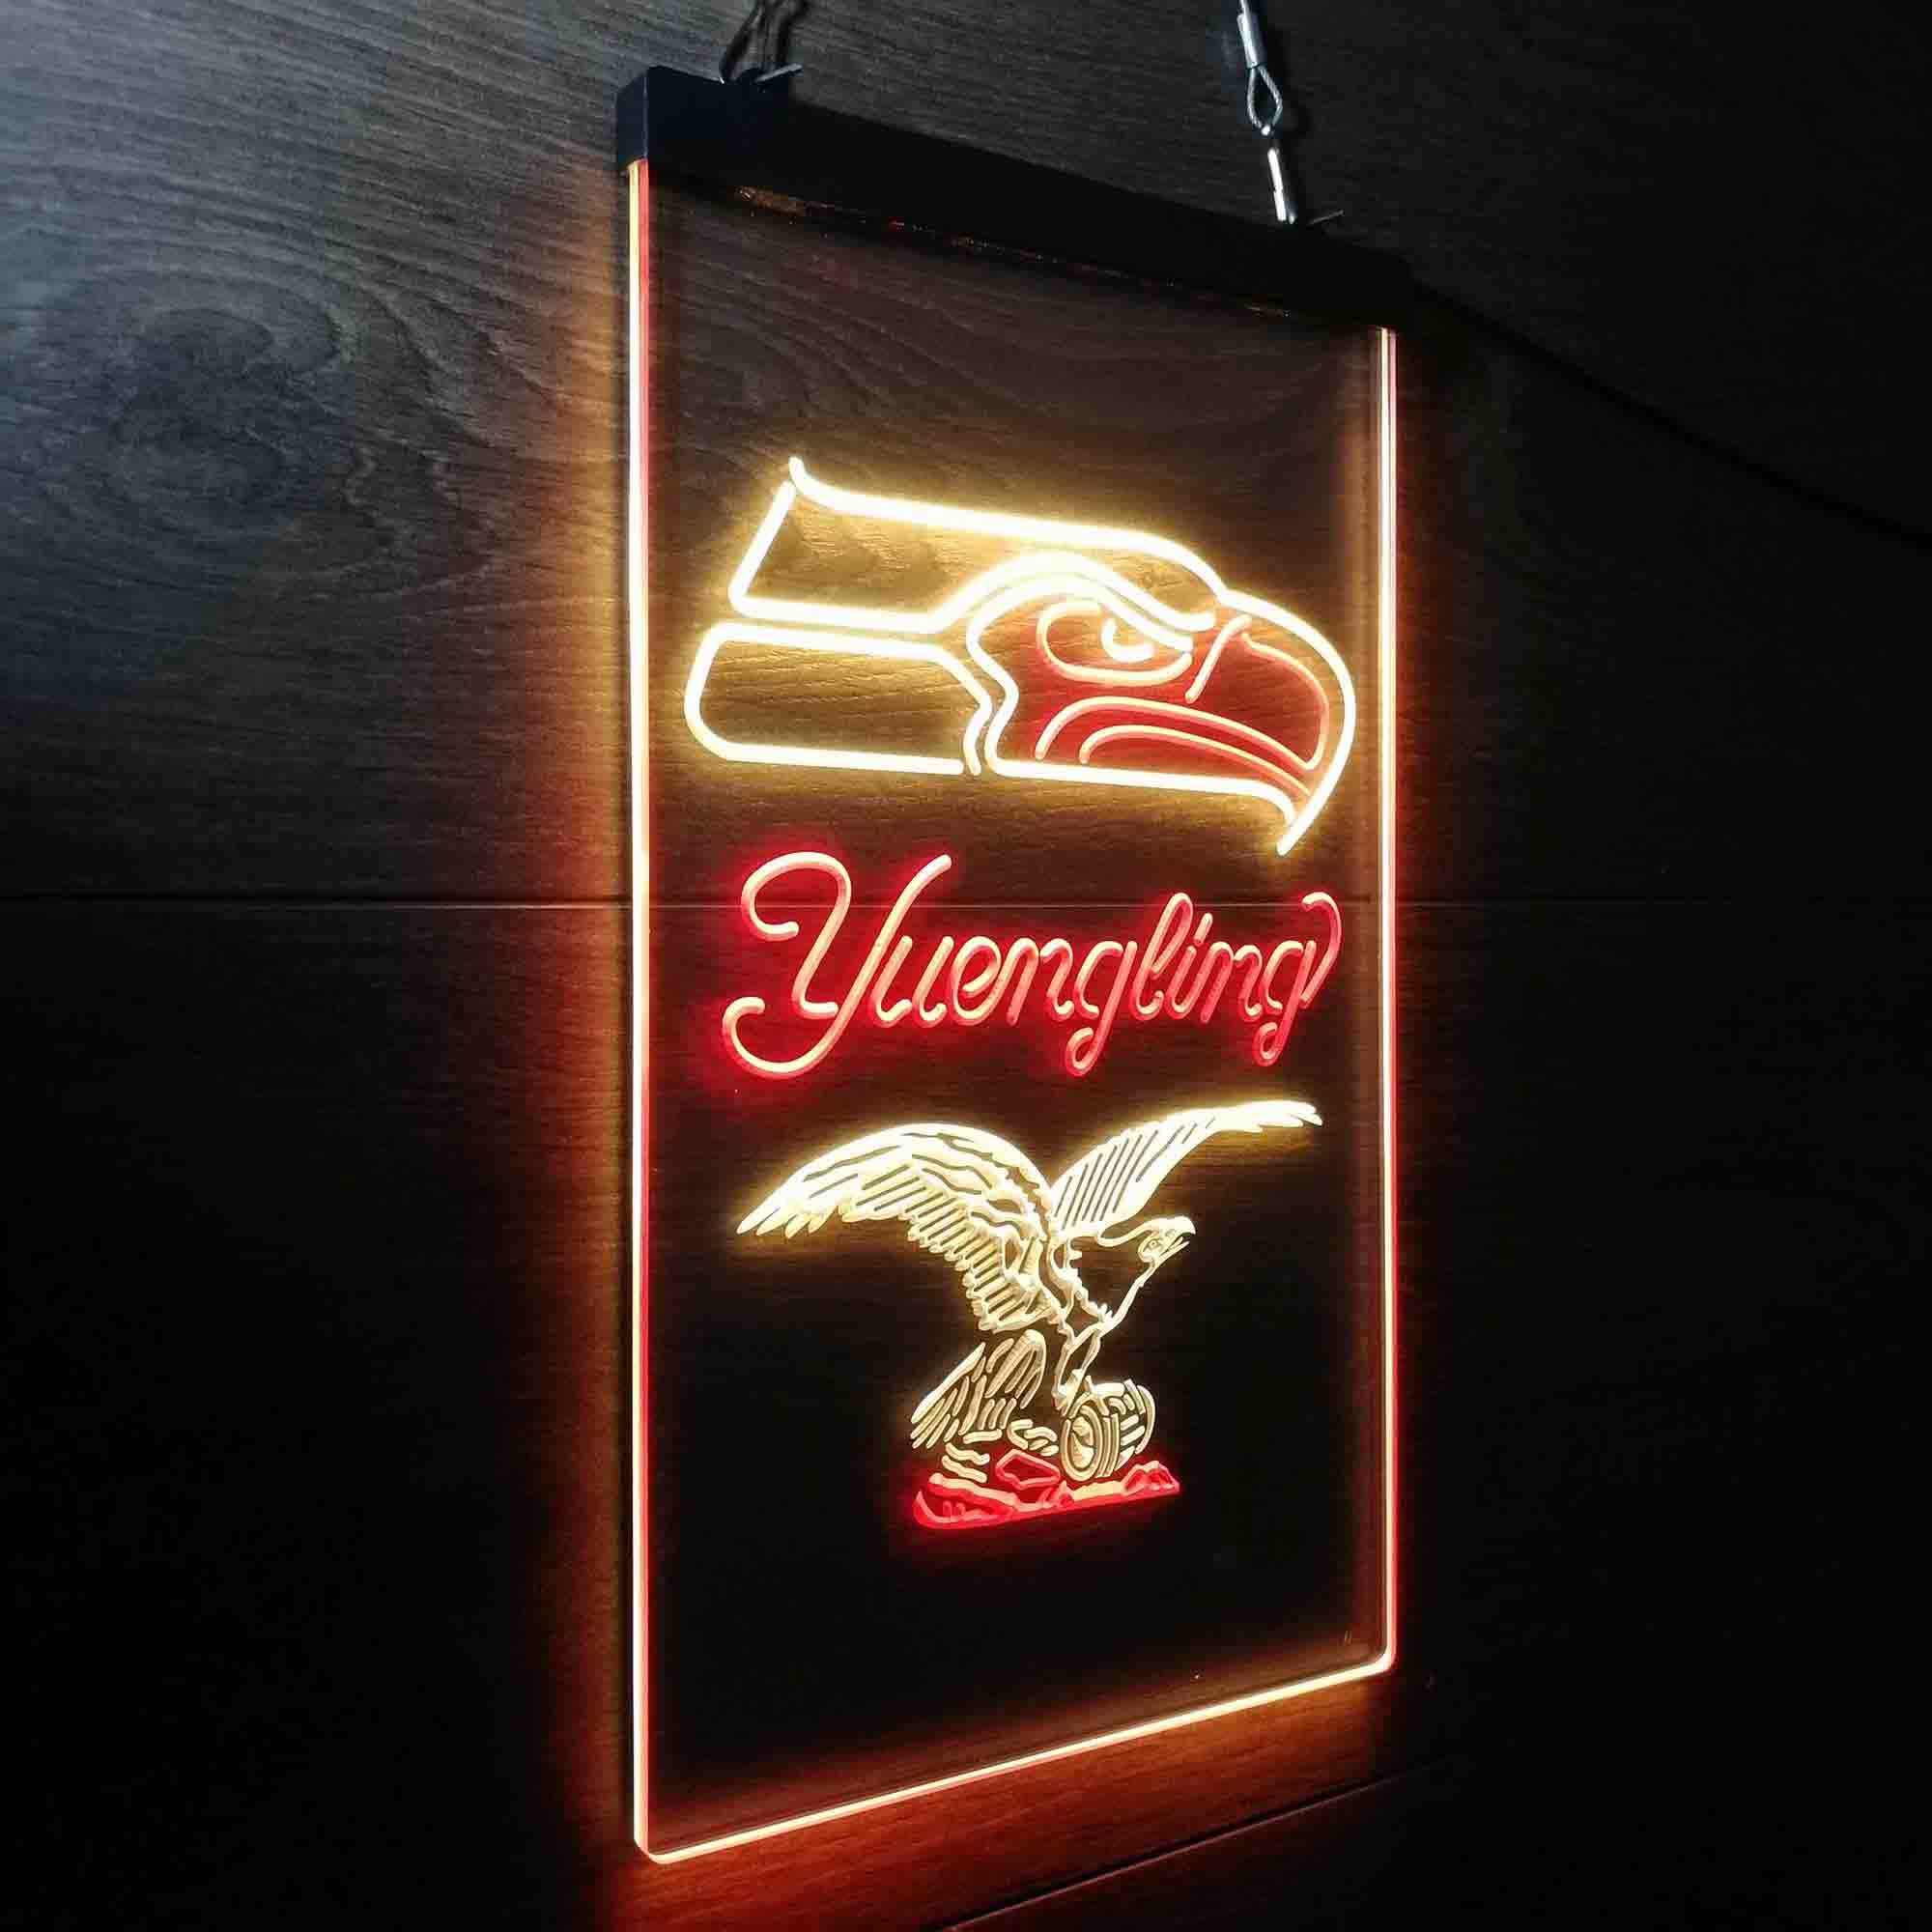 Yuengling Bar Seattle Seahawks Est. 1976 Neon-Like LED Sign